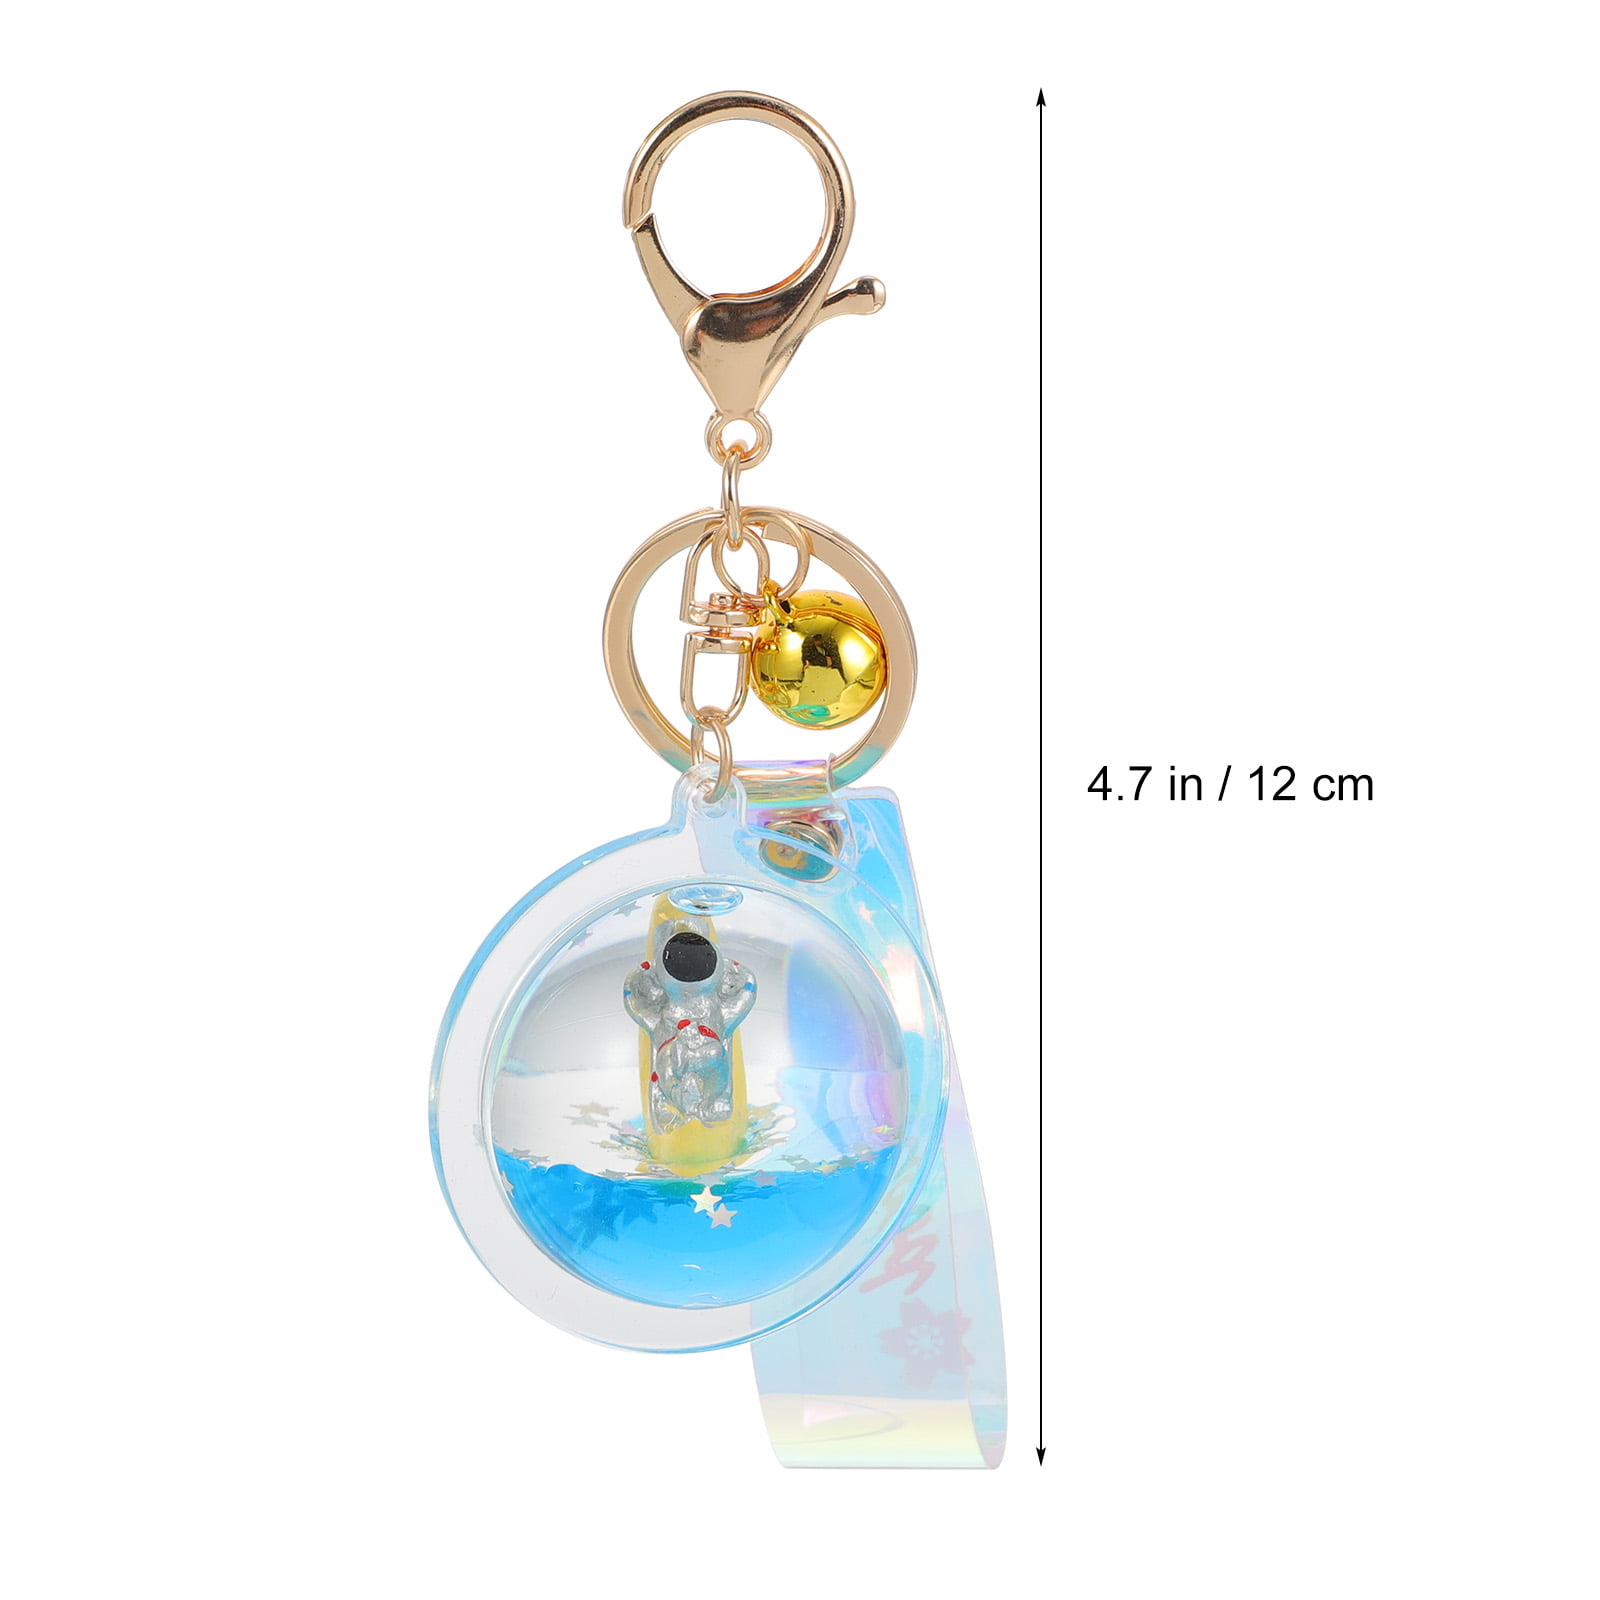 Homemaxs 2pcs Poop Shaped Keychain Pendants Luminous Novel Key Ring Handbag Hanging Decor, Adult Unisex, Size: 8.5X3.5X3.5CM